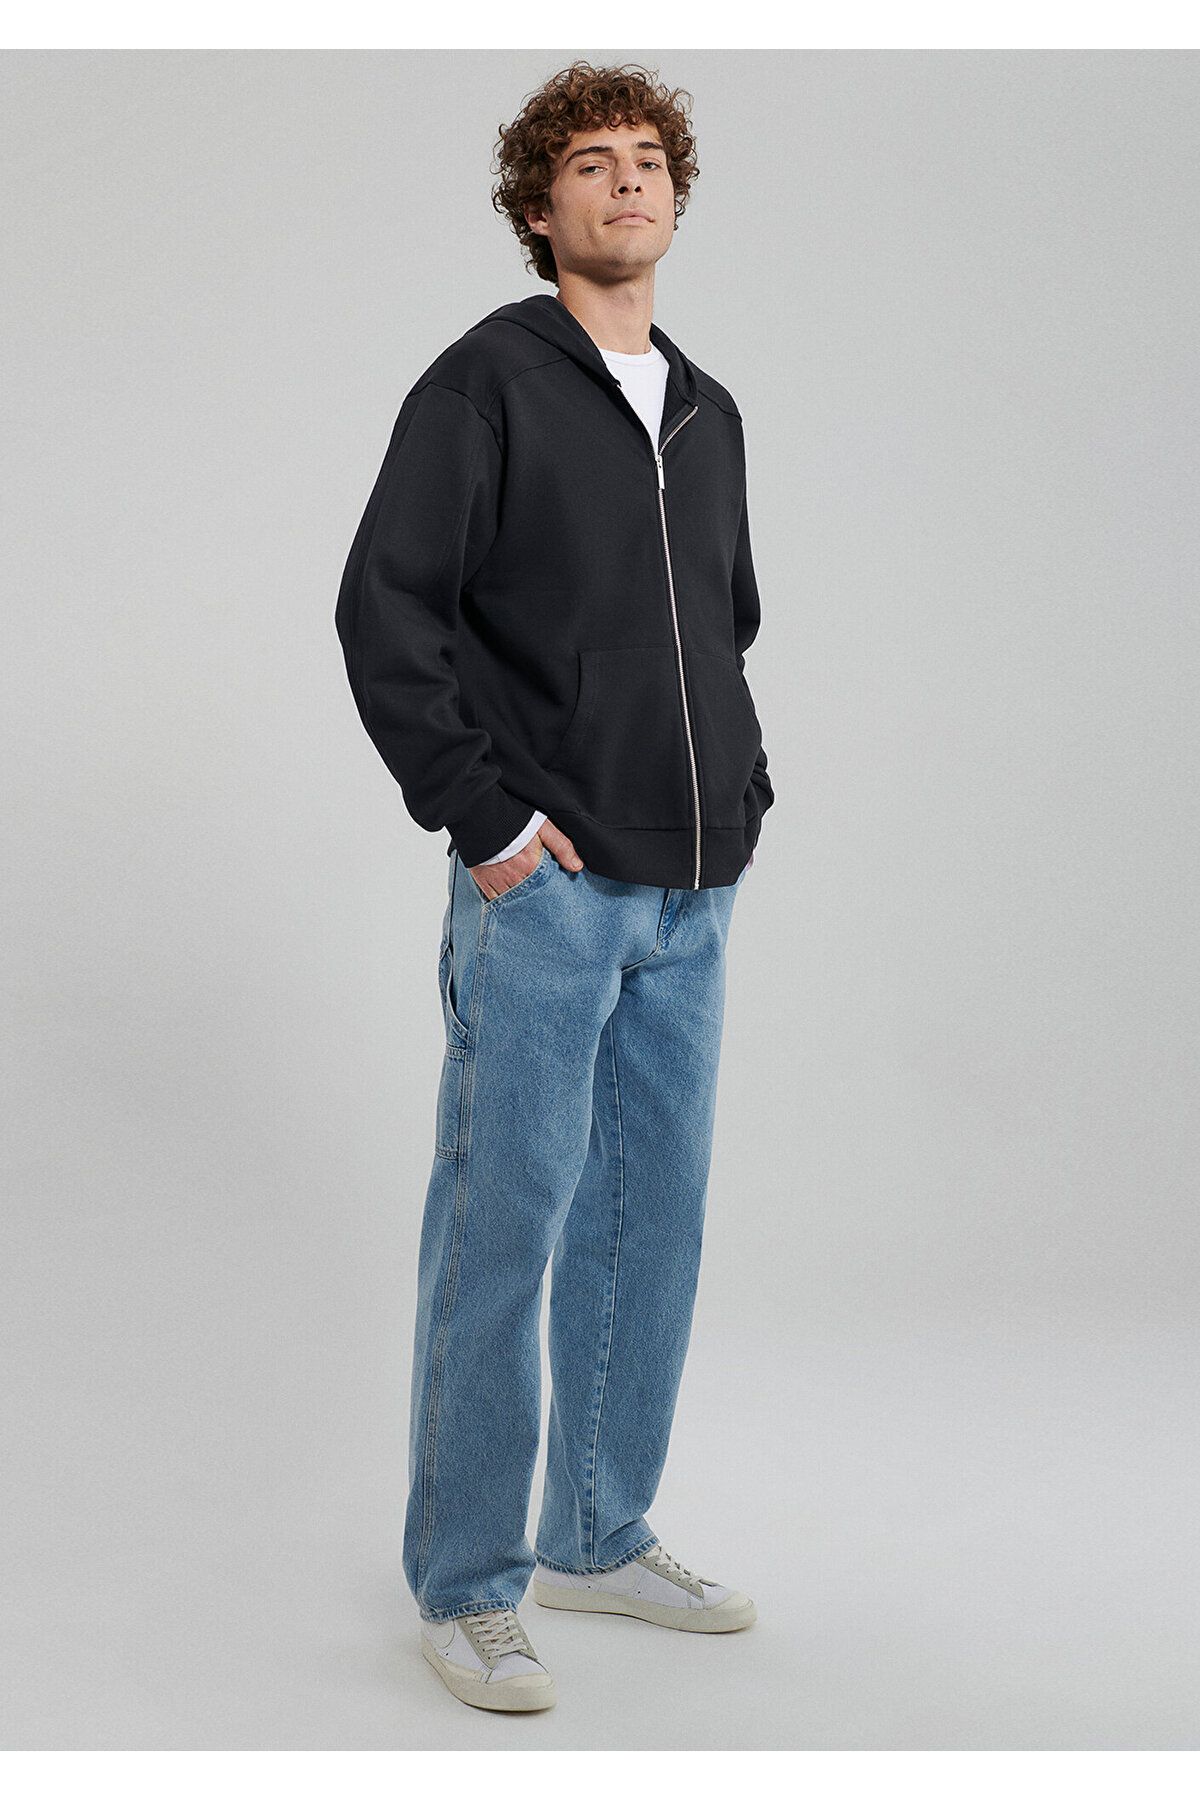 Mavi Kapüşonlu Fermuarlı Siyah Basic Sweatshirt 0S10095-900